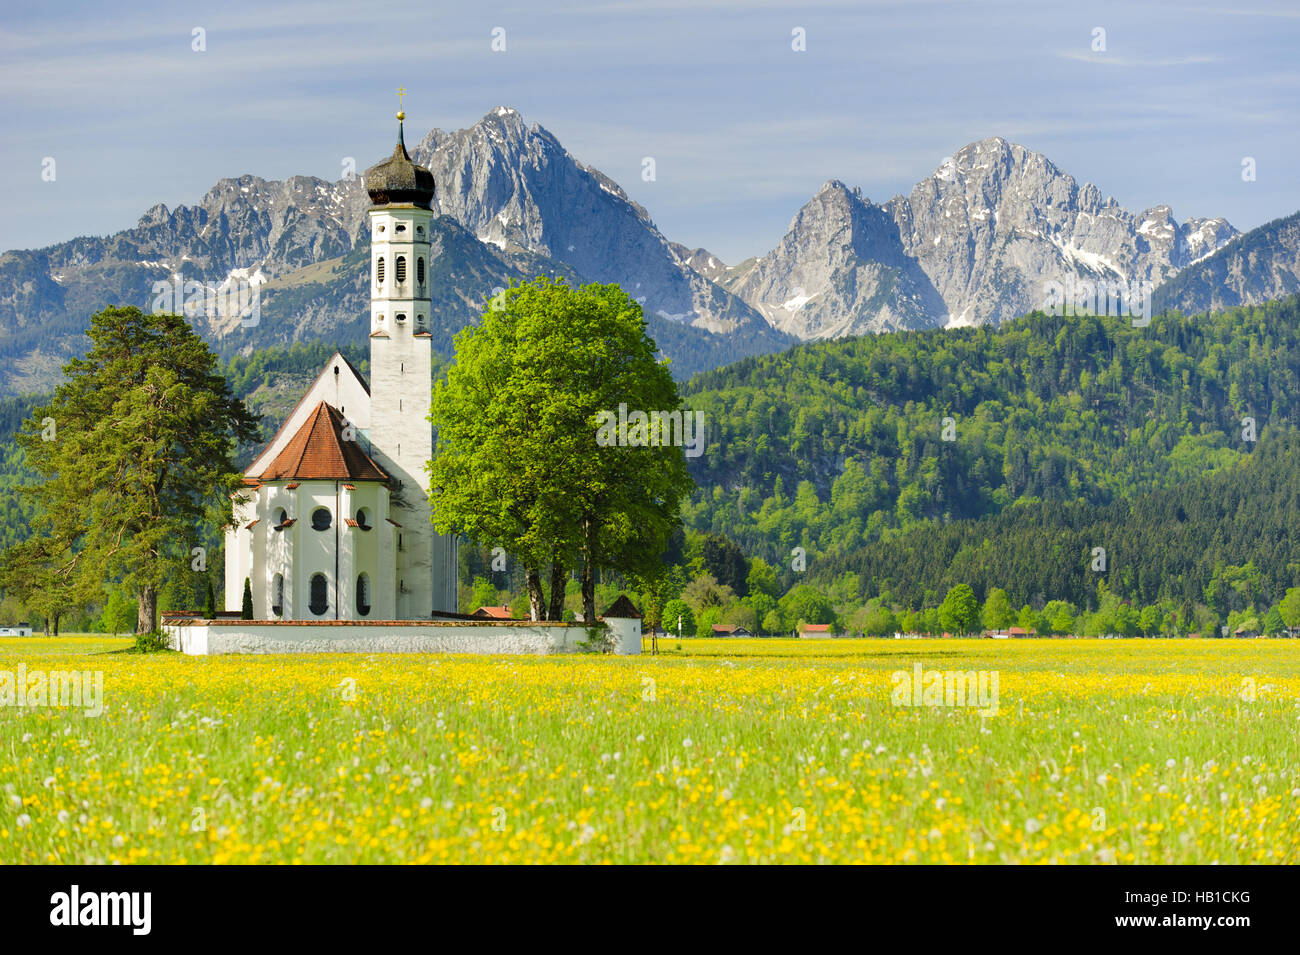 landmark church St. Coloman in Bavaria Stock Photo